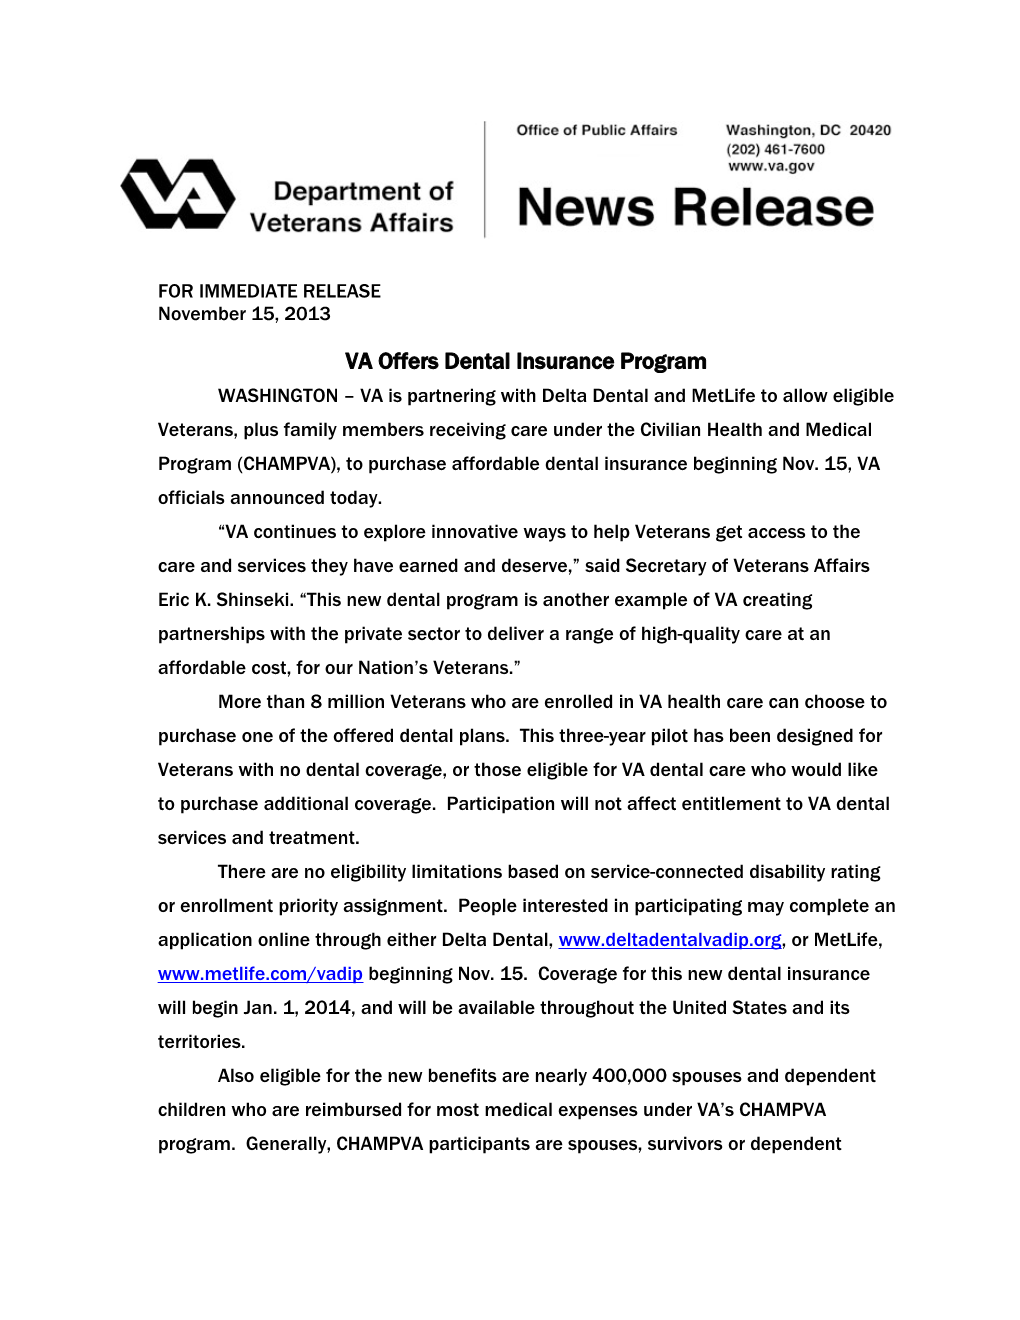 VA Offers Dental Insurance Program